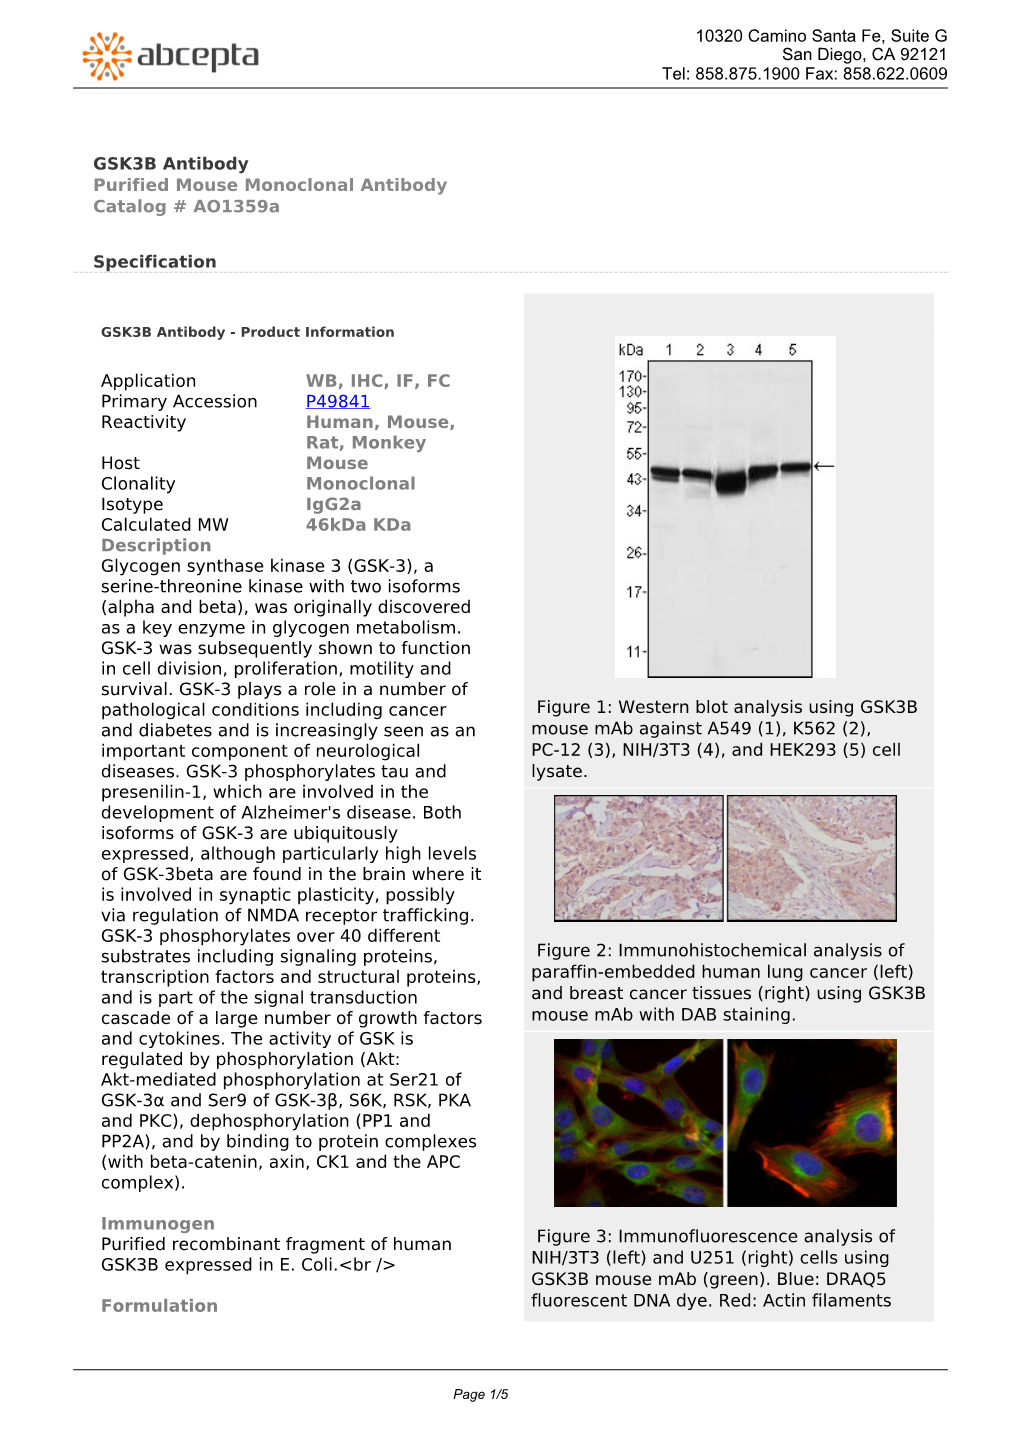 GSK3B Antibody Purified Mouse Monoclonal Antibody Catalog # Ao1359a